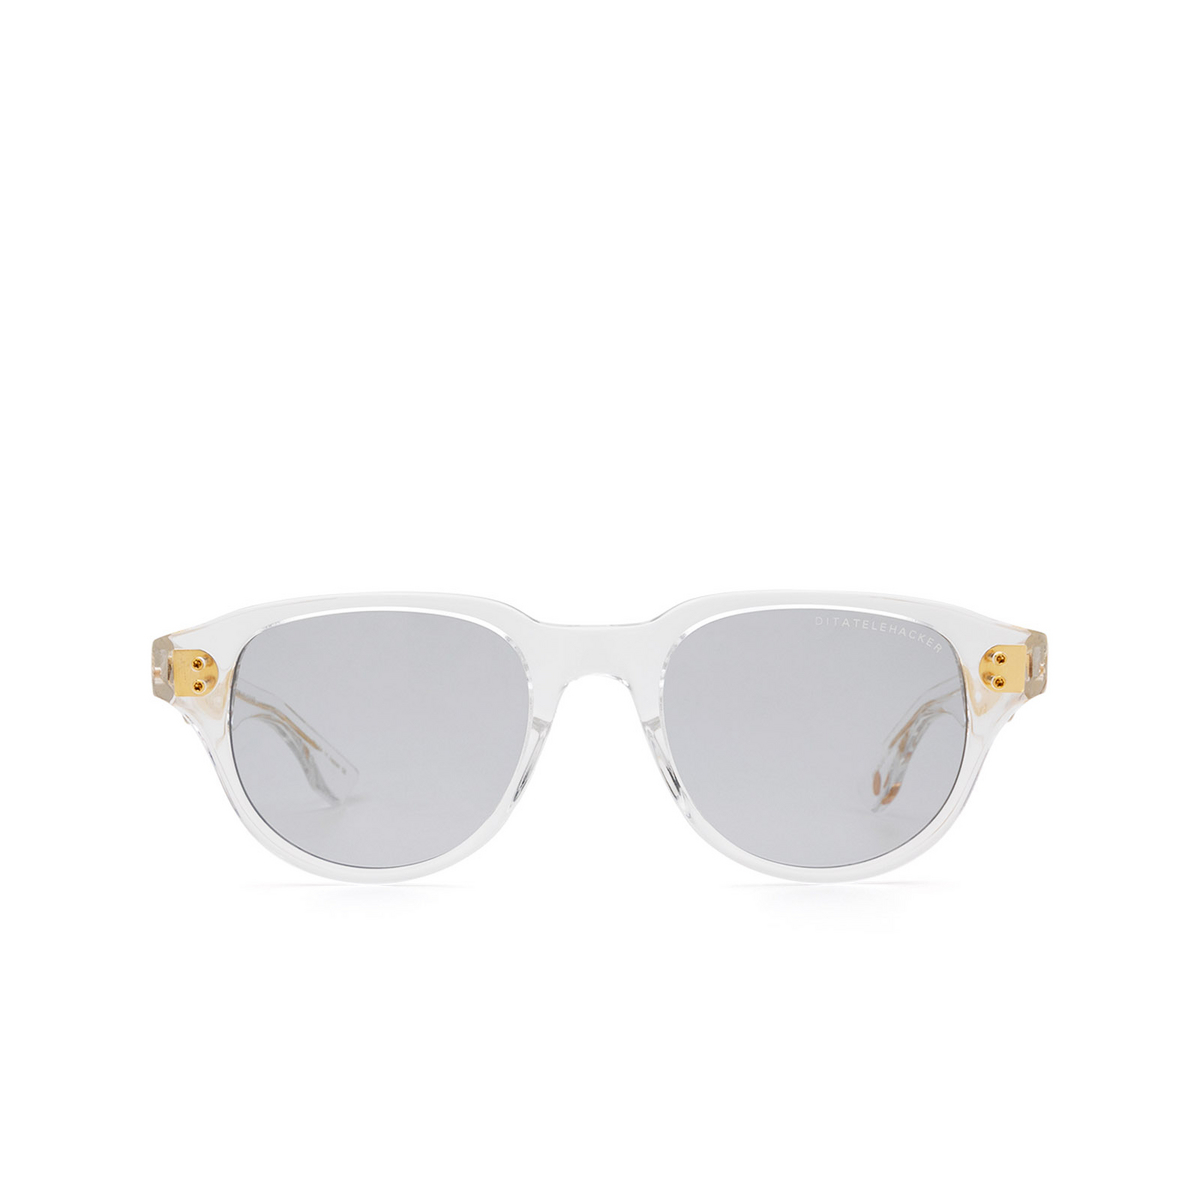 Dita TELEHACKER Sunglasses CLR-GLD Crystal Gold - front view